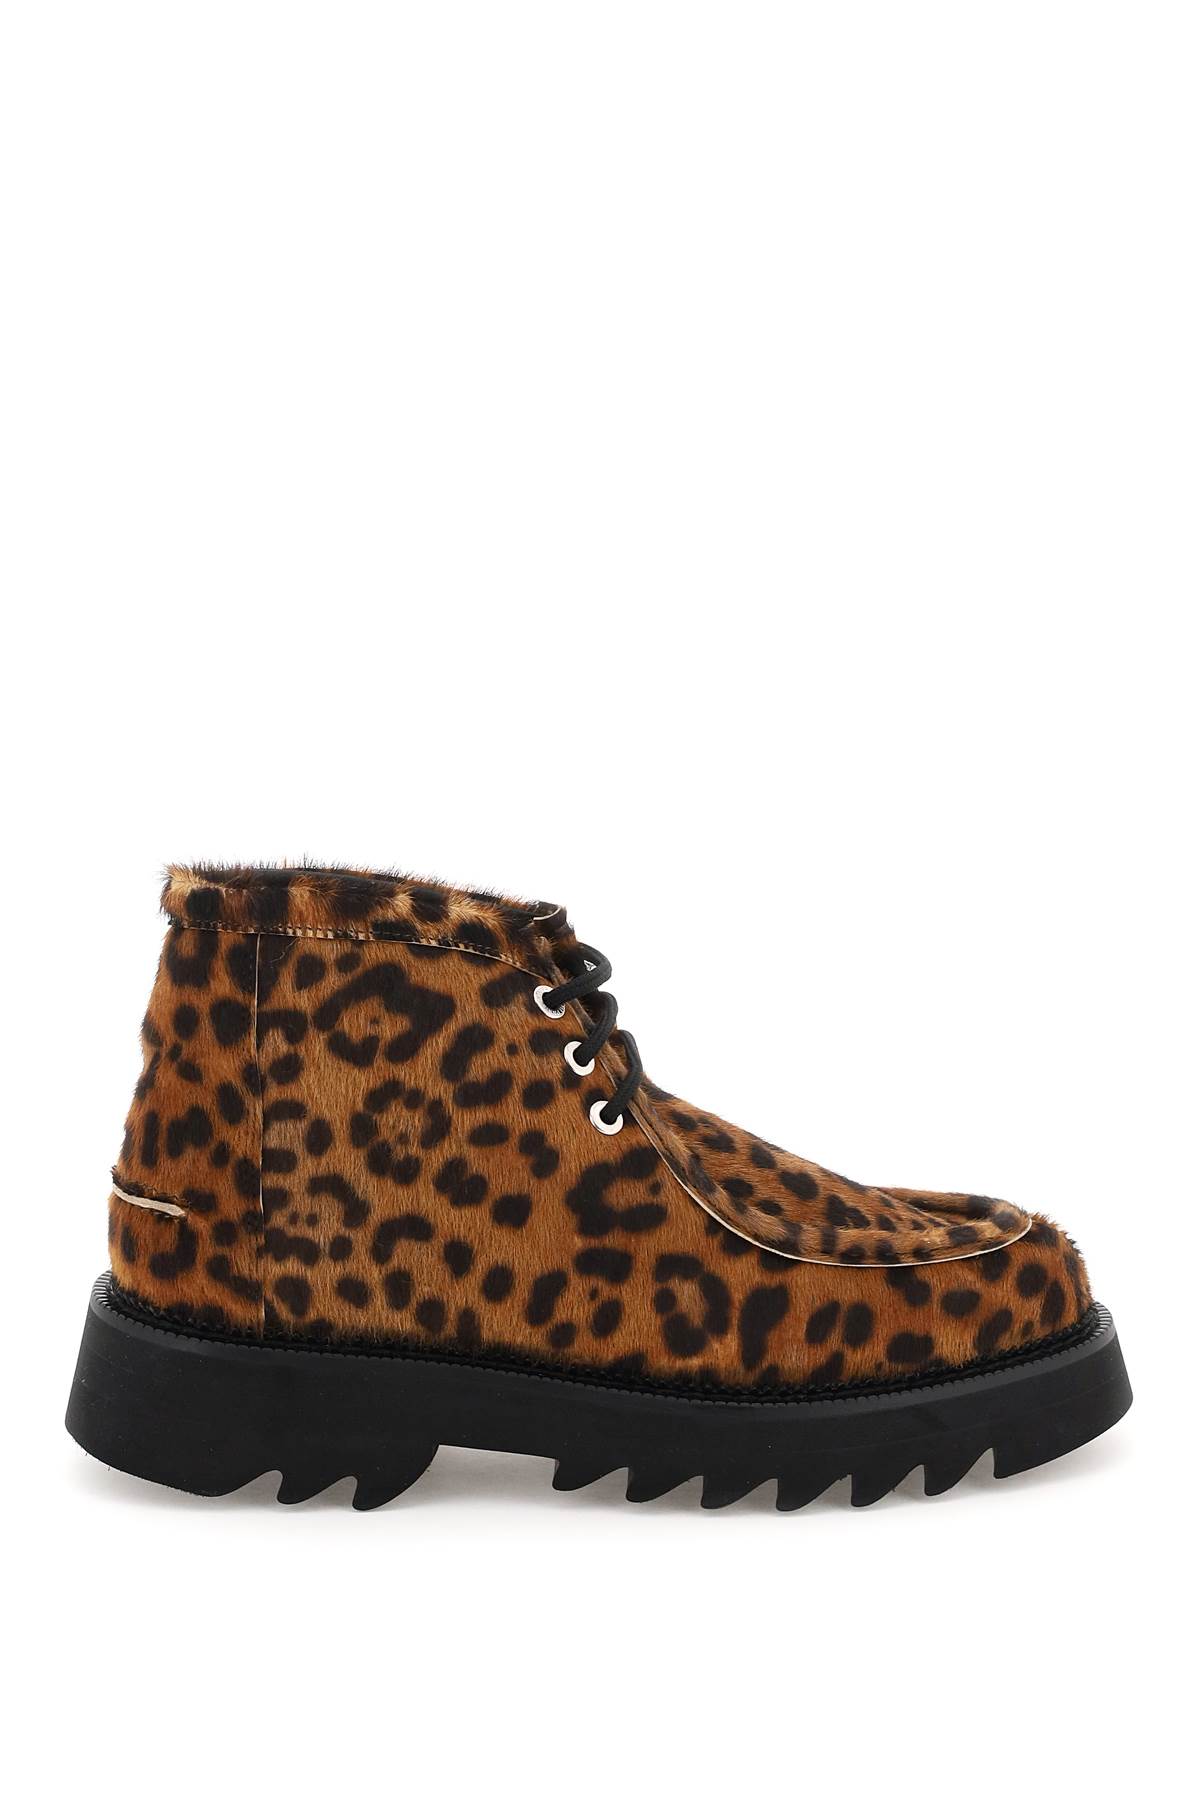 Ami Alexandre Mattiussi Leopard Calfhair Lace-up Ankle Boots